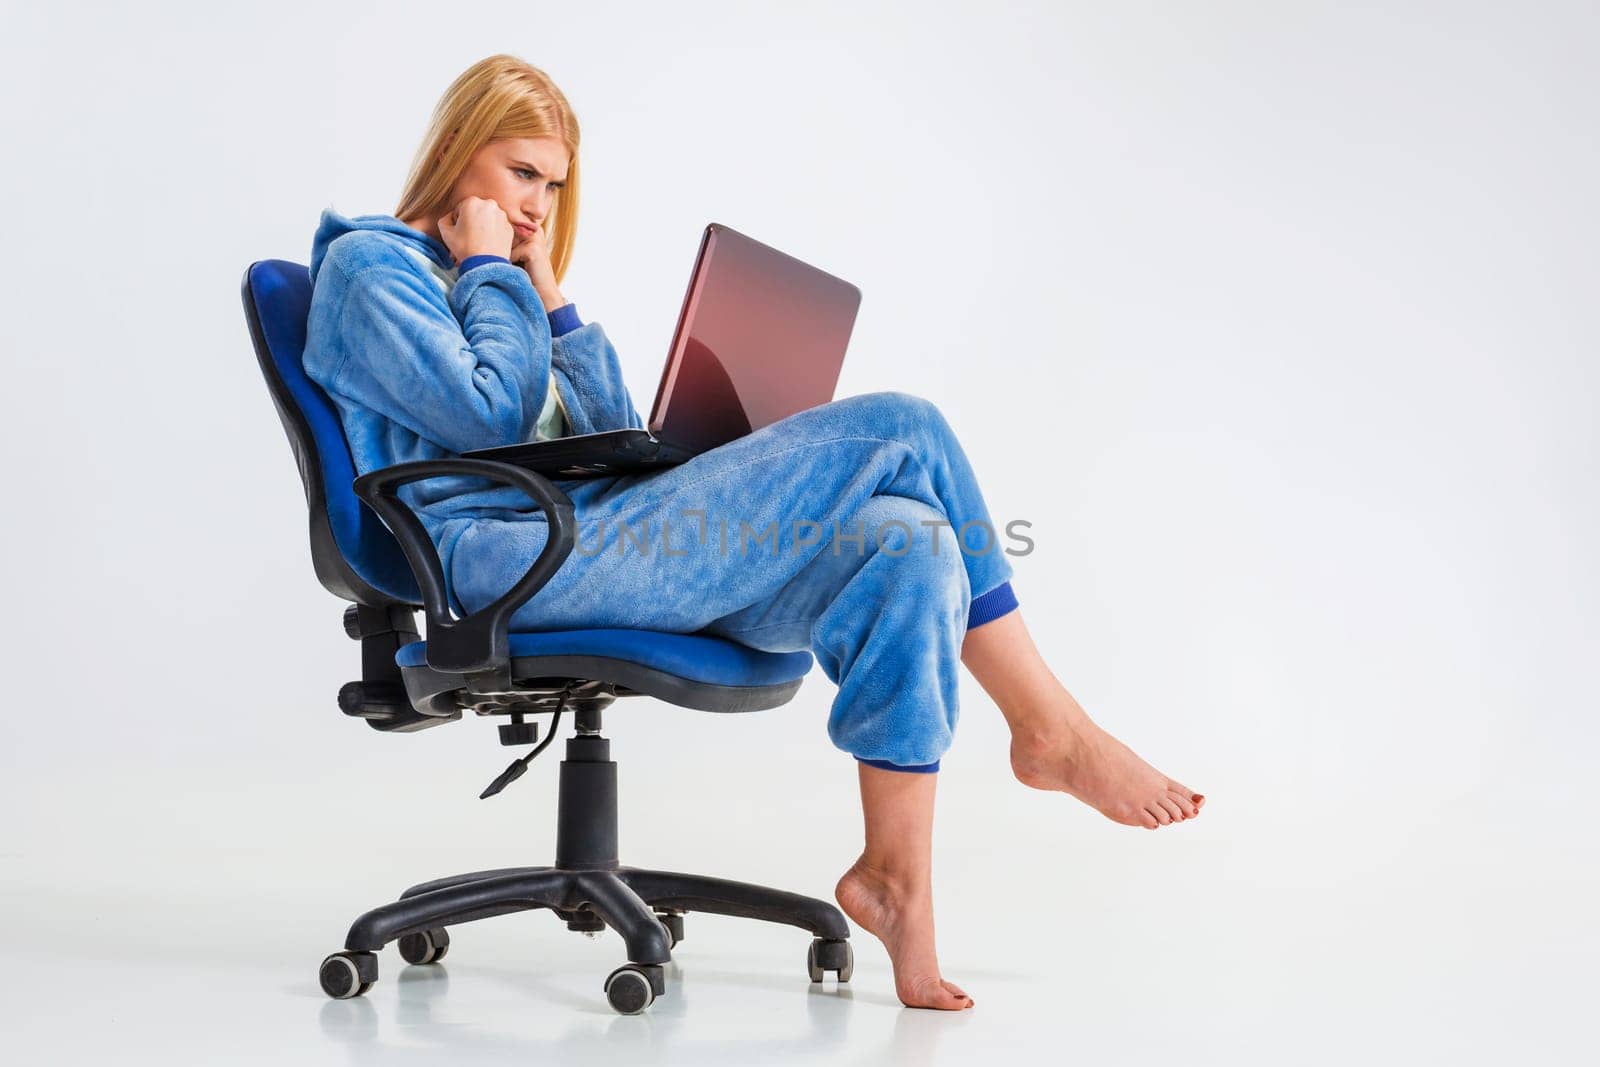 girl in pajamas with a laptop by nazarovsergey